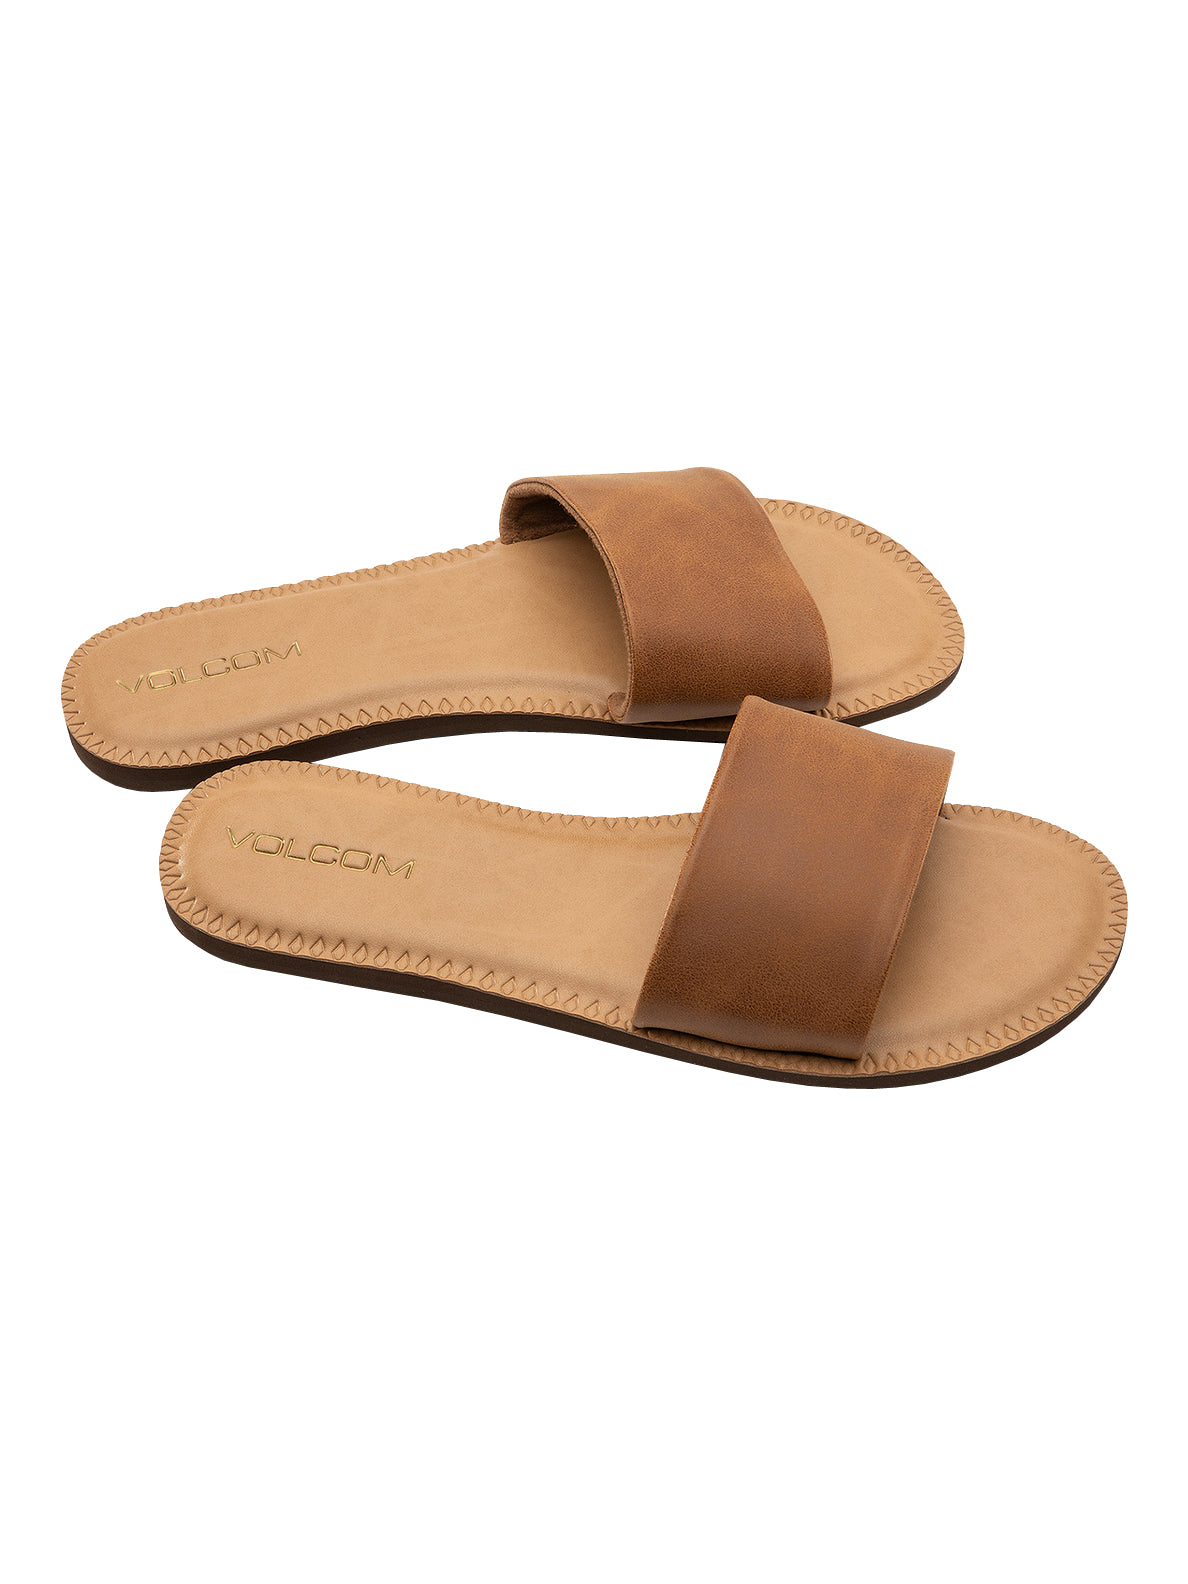 Volcom Simple Slide Womens Sandal TAN23-Tan 6